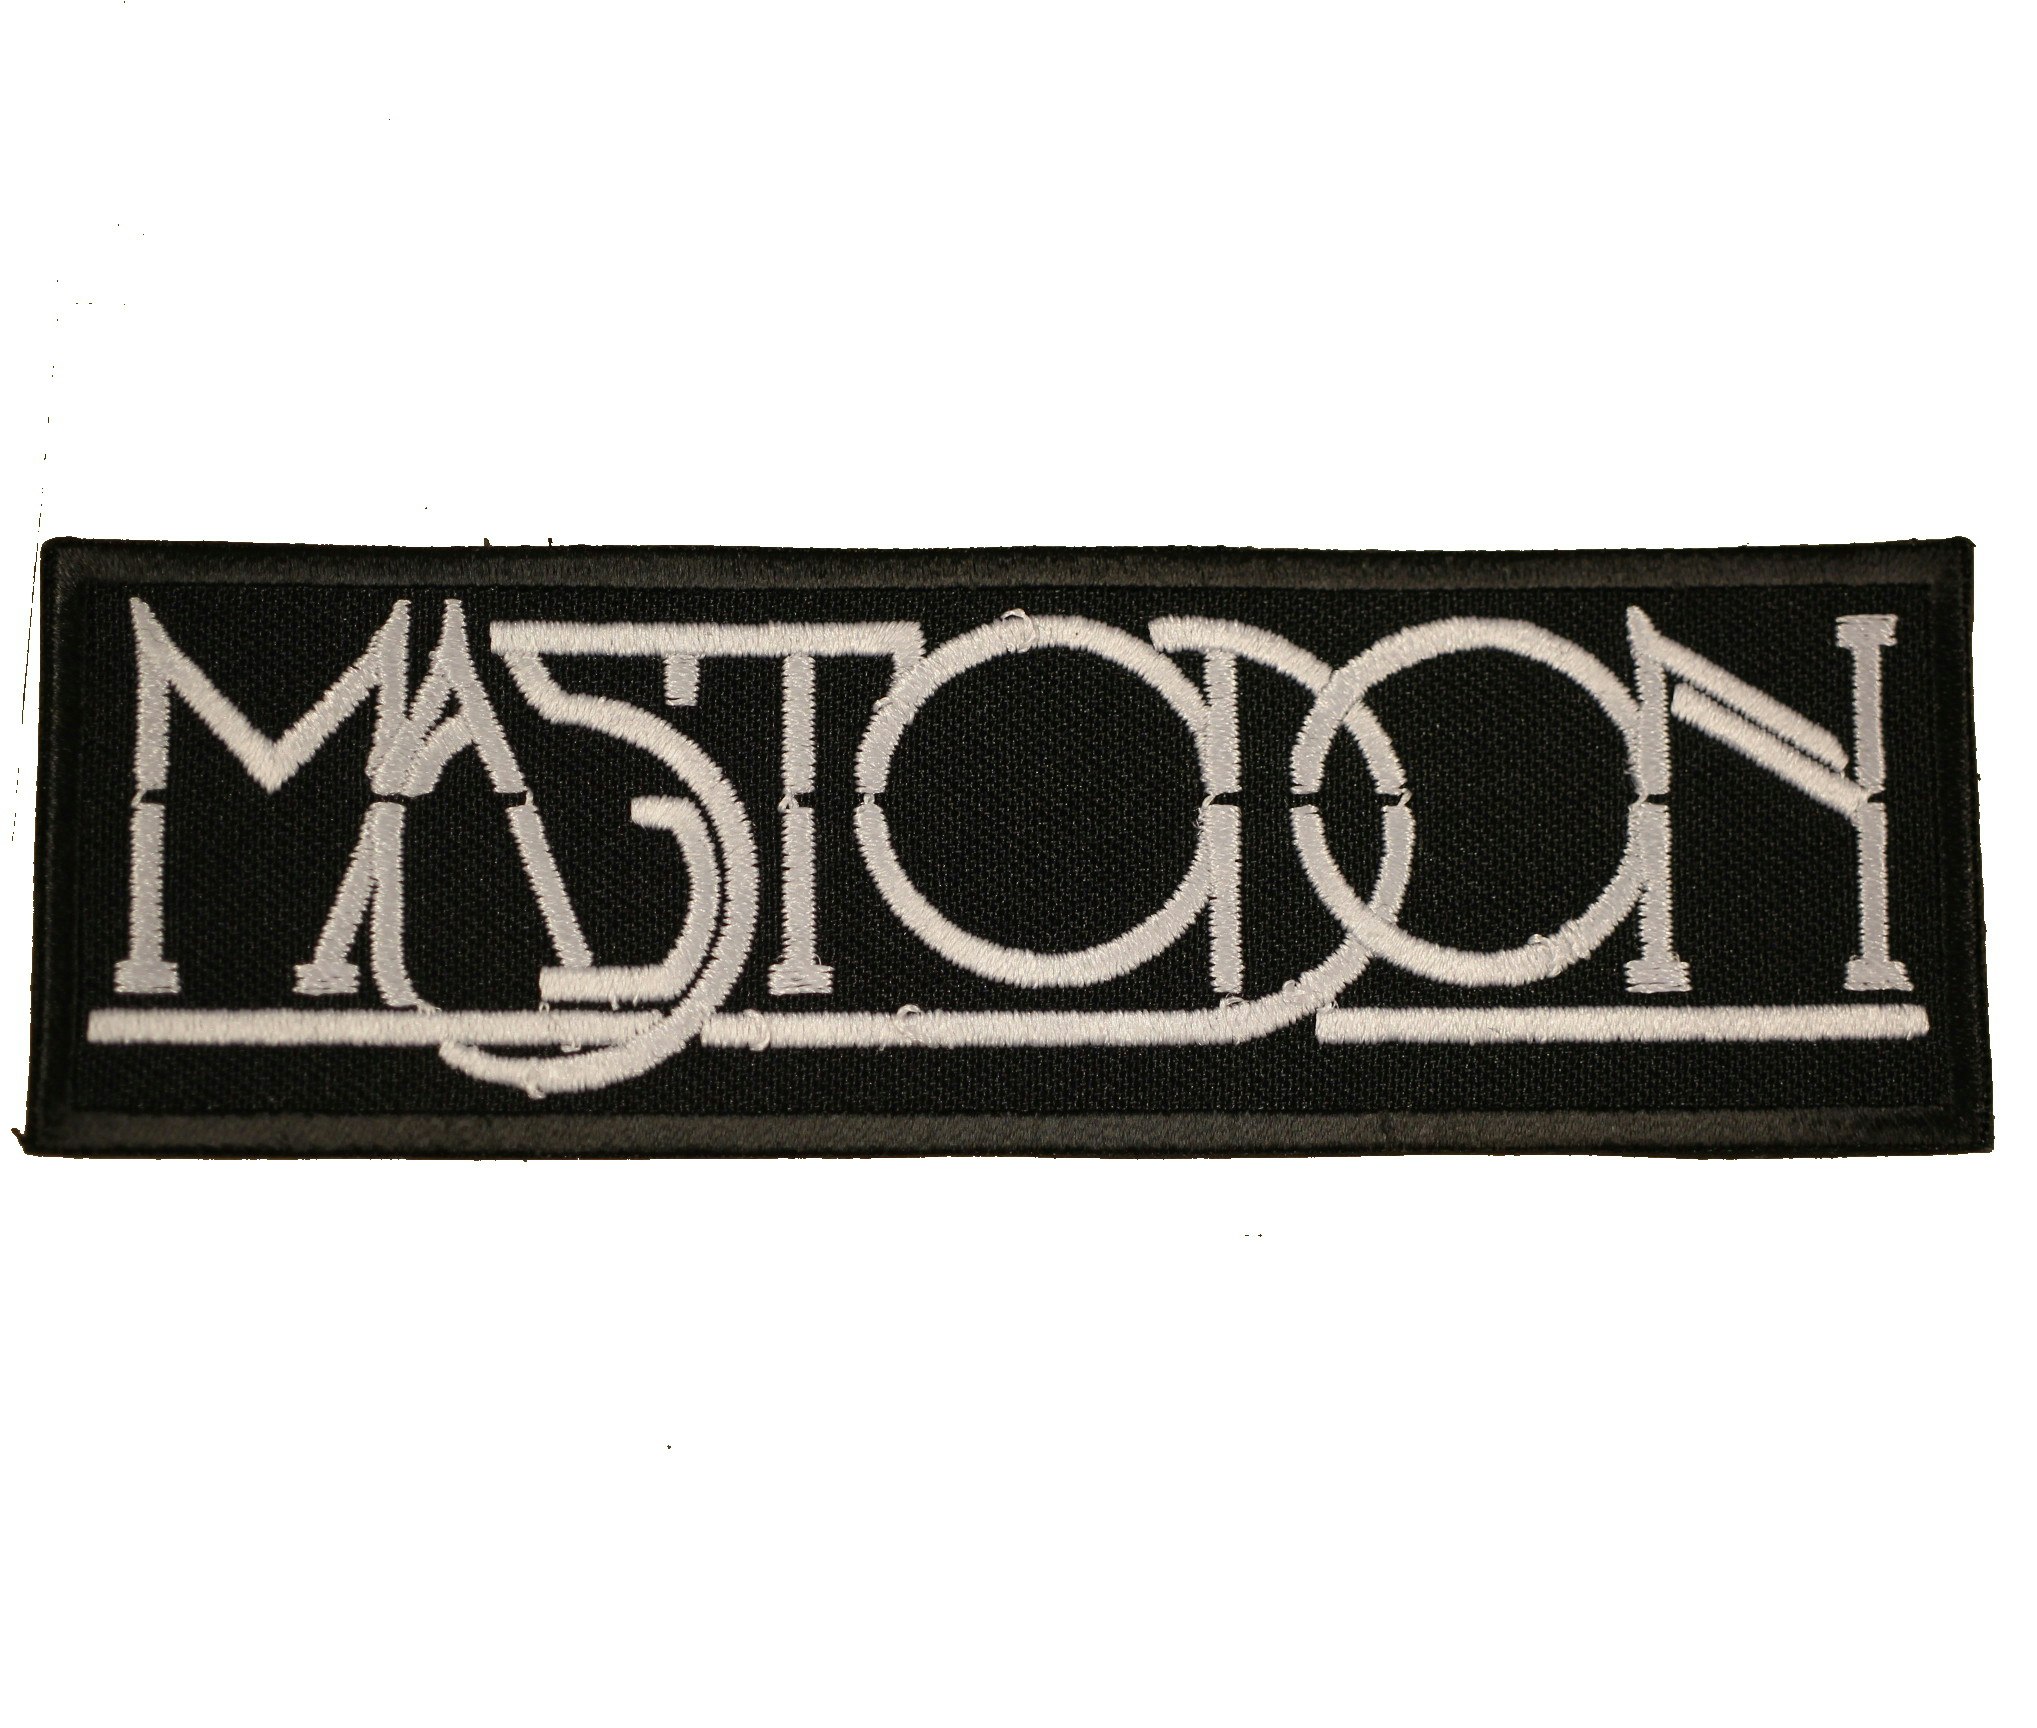 Mastodon logo patch